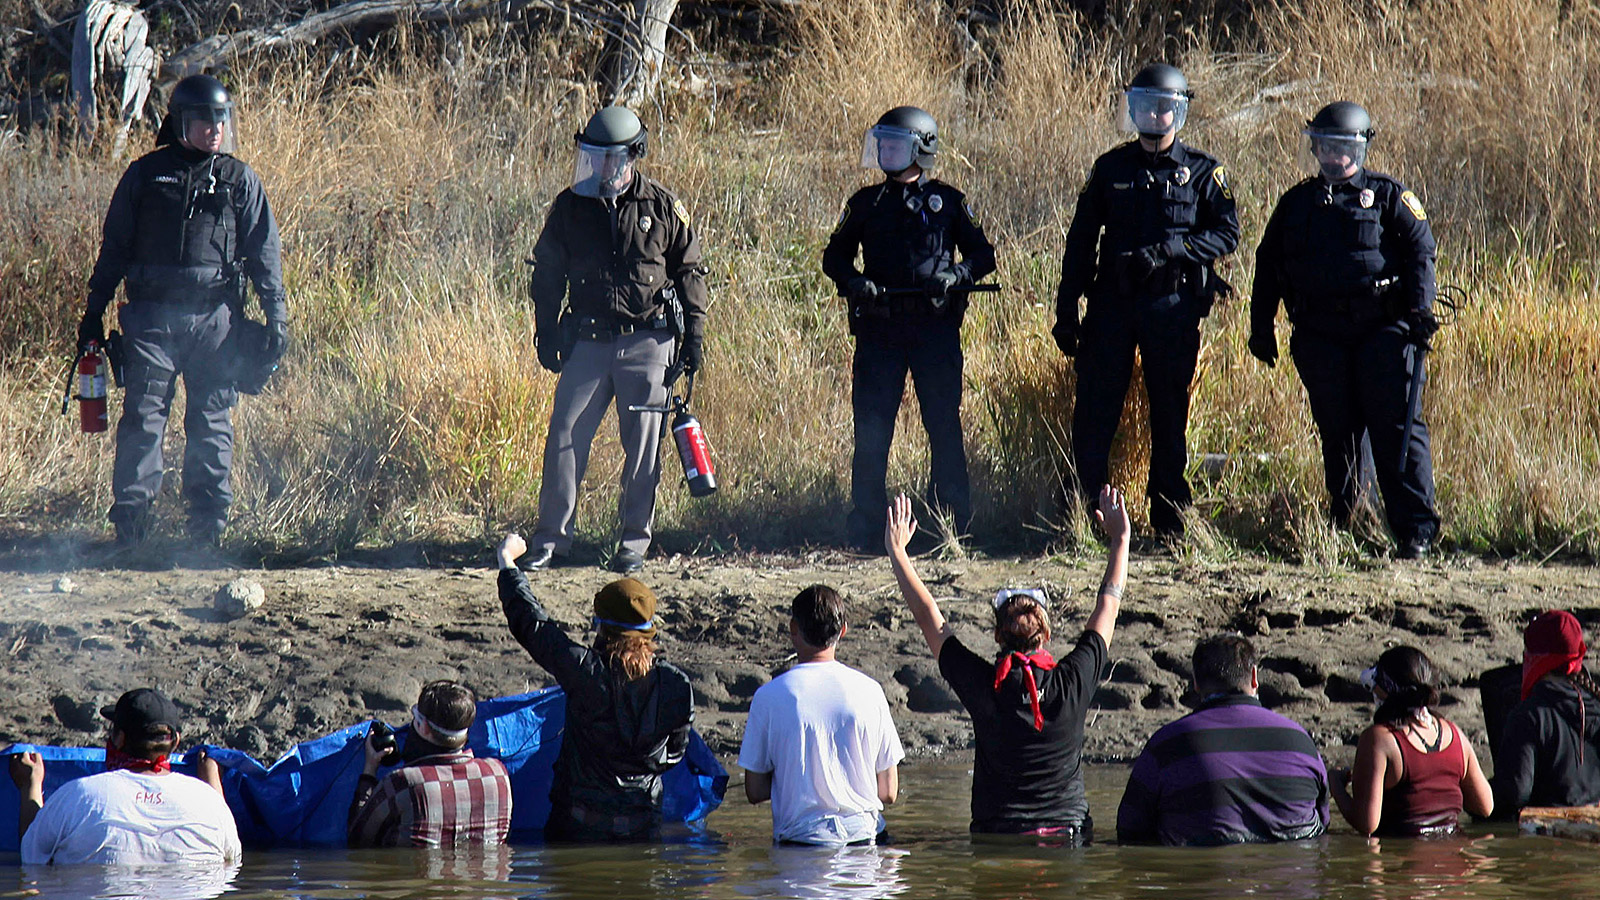 DAPL protestors wading in a creek confront police in riot gear